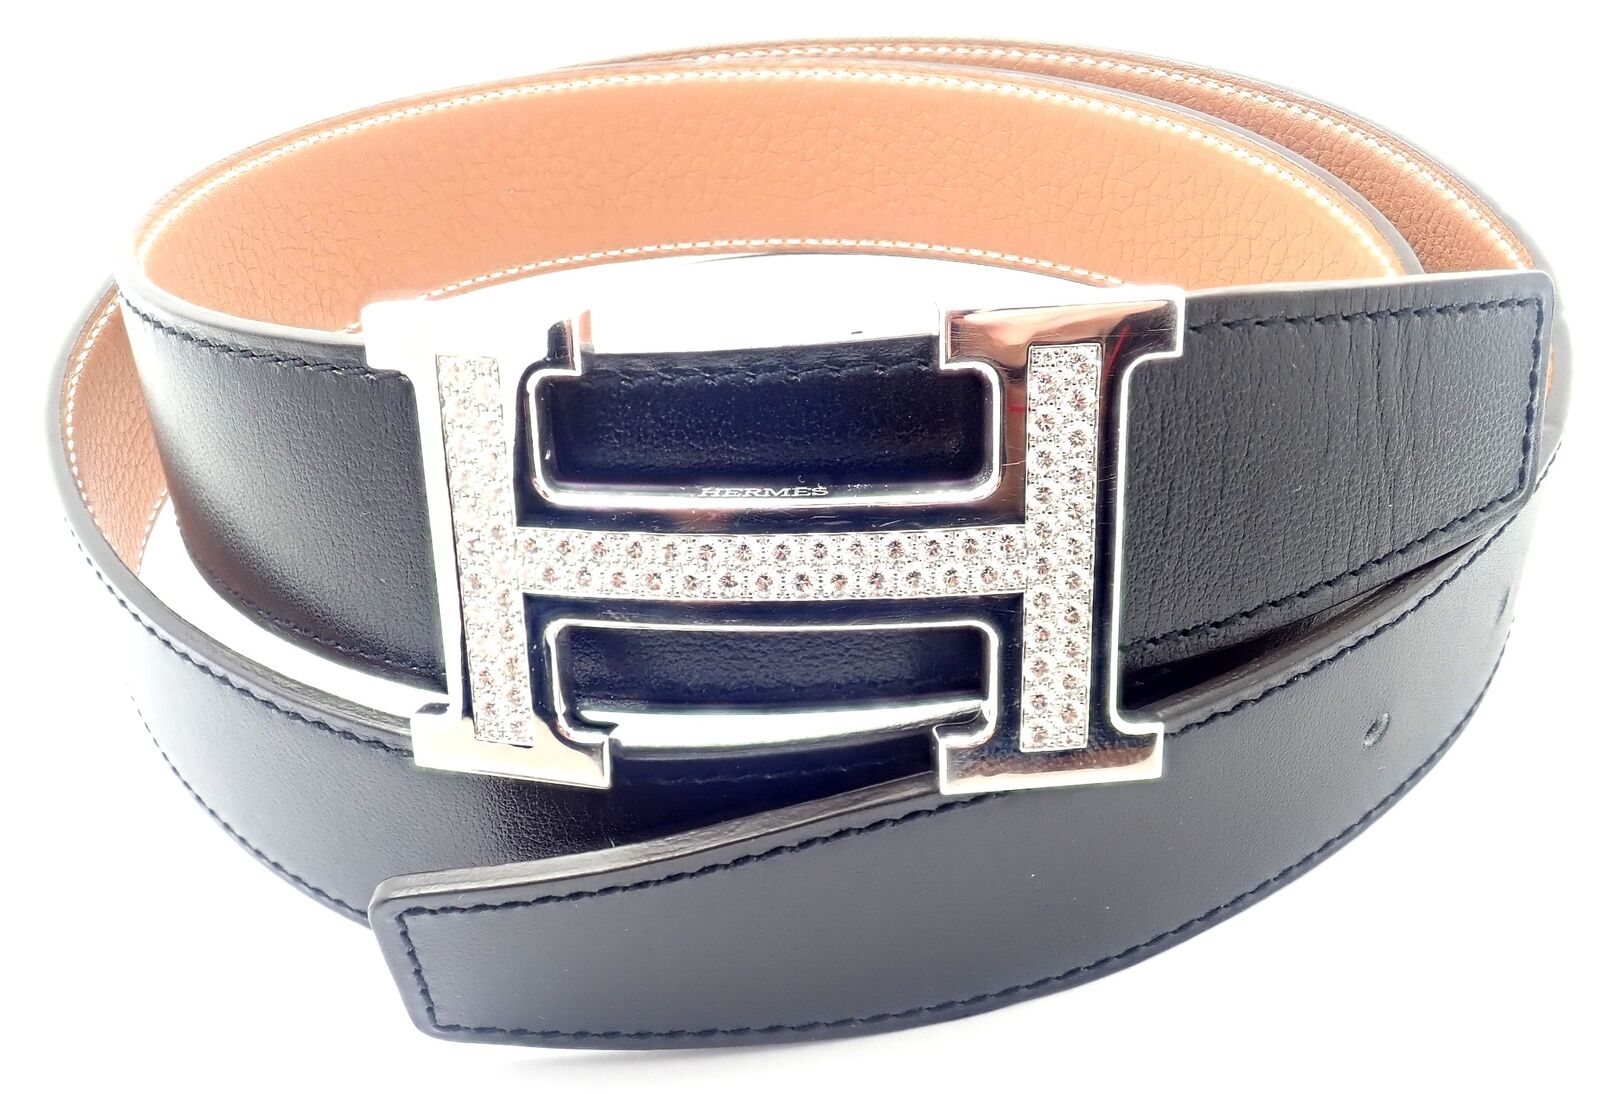 New Designer Mens Belt : Chris Brown wearing A Louis Vuitton belt  Louis  vuitton mens belt, Louis vuitton belt, Louis vuitton belt men outfit